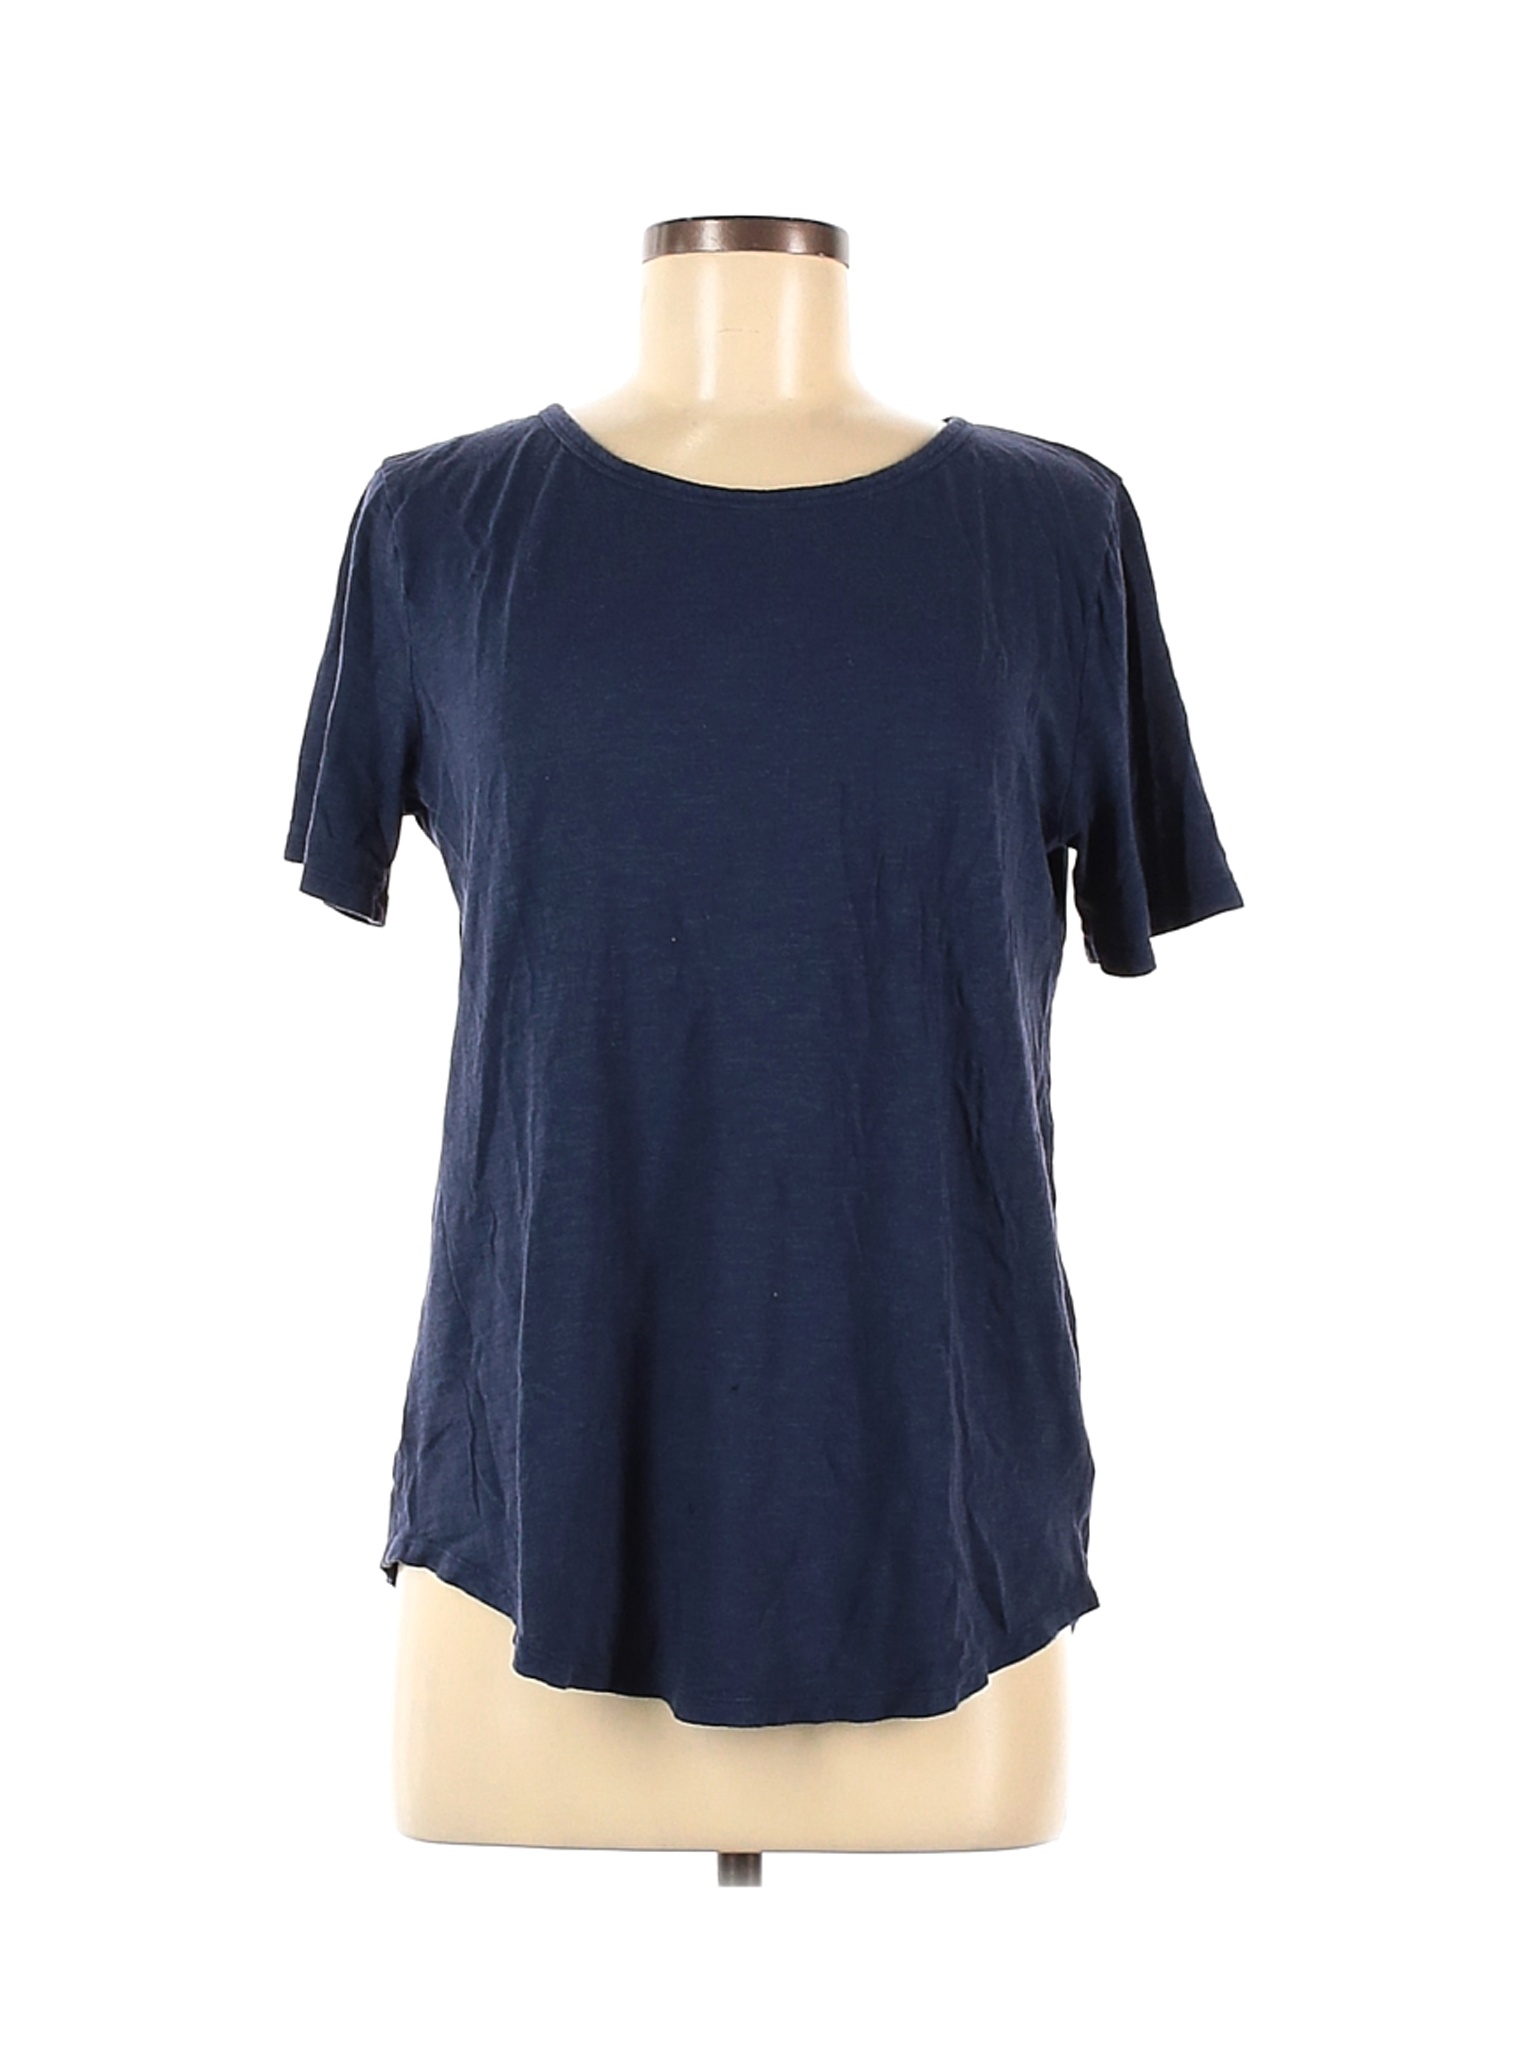 Old Navy Women Blue Short Sleeve T-Shirt M | eBay